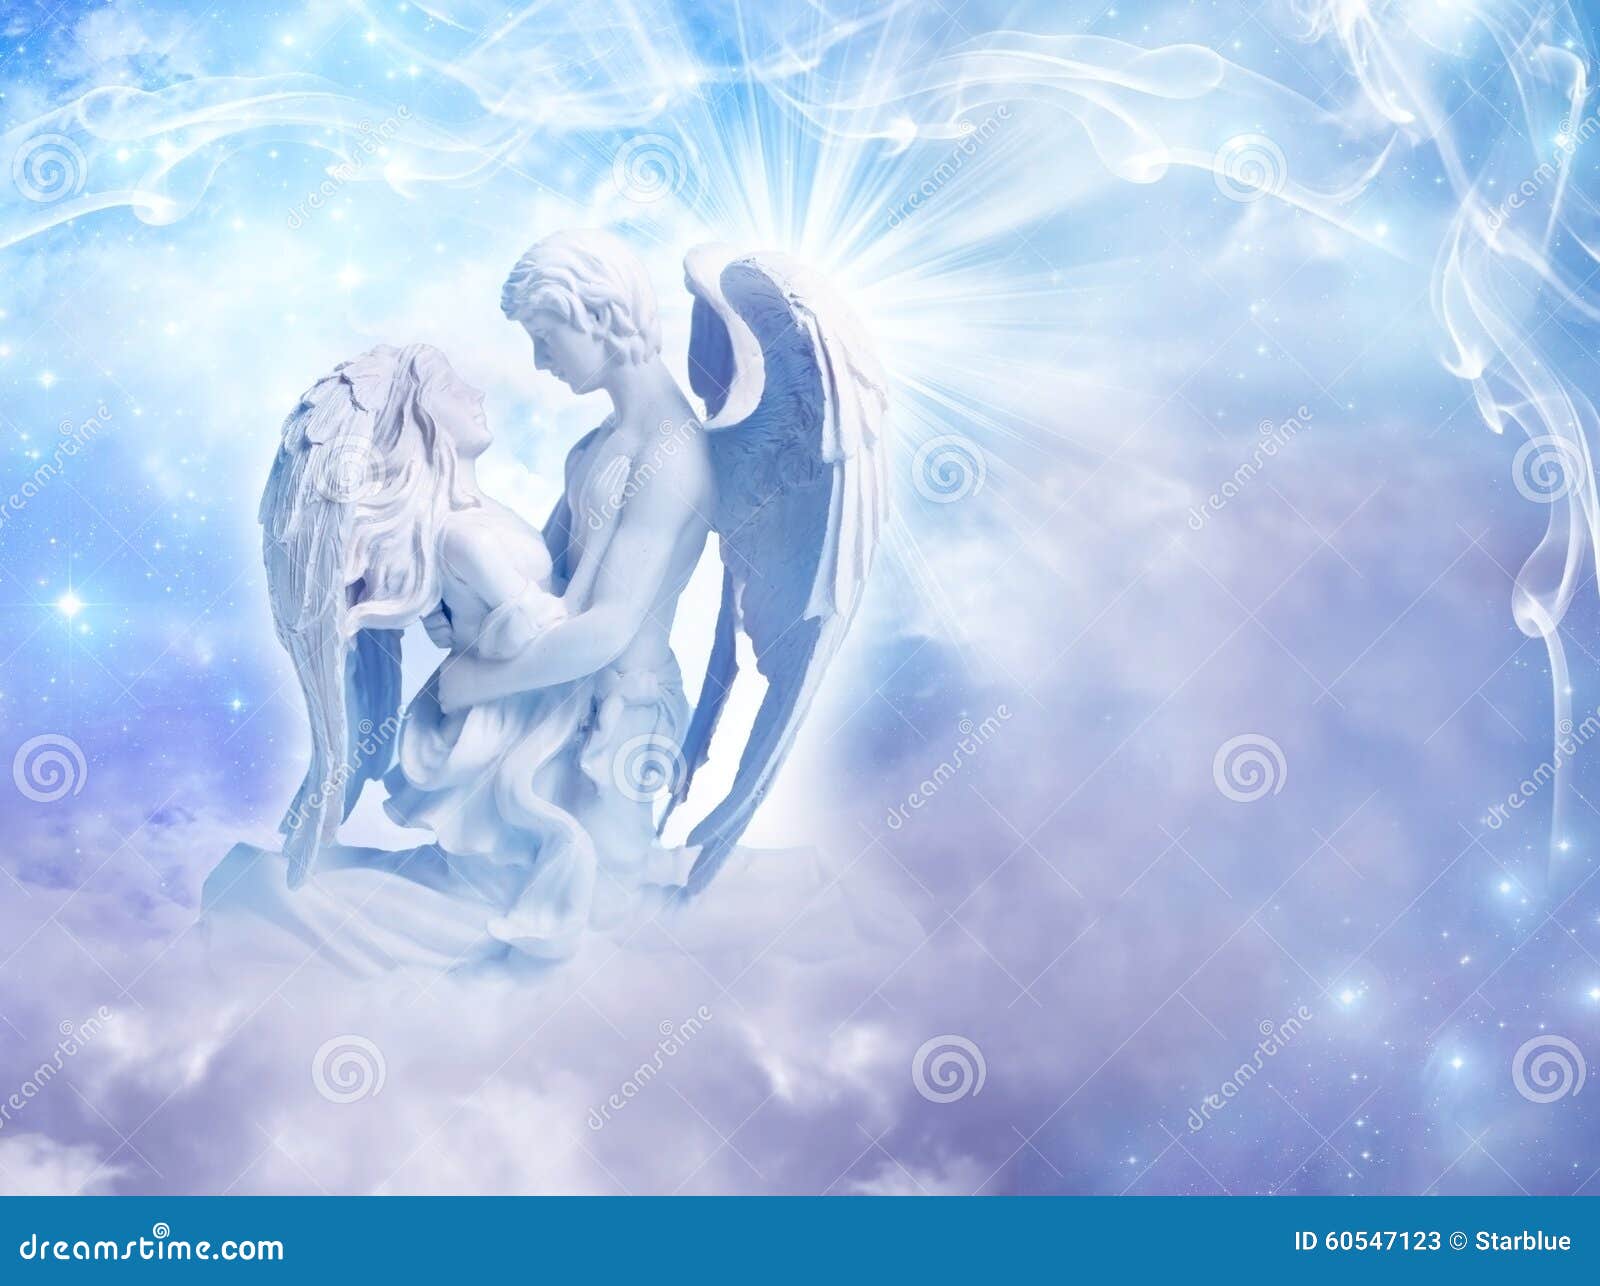 Angel love stock image. Image of spiritual, background - 60547123